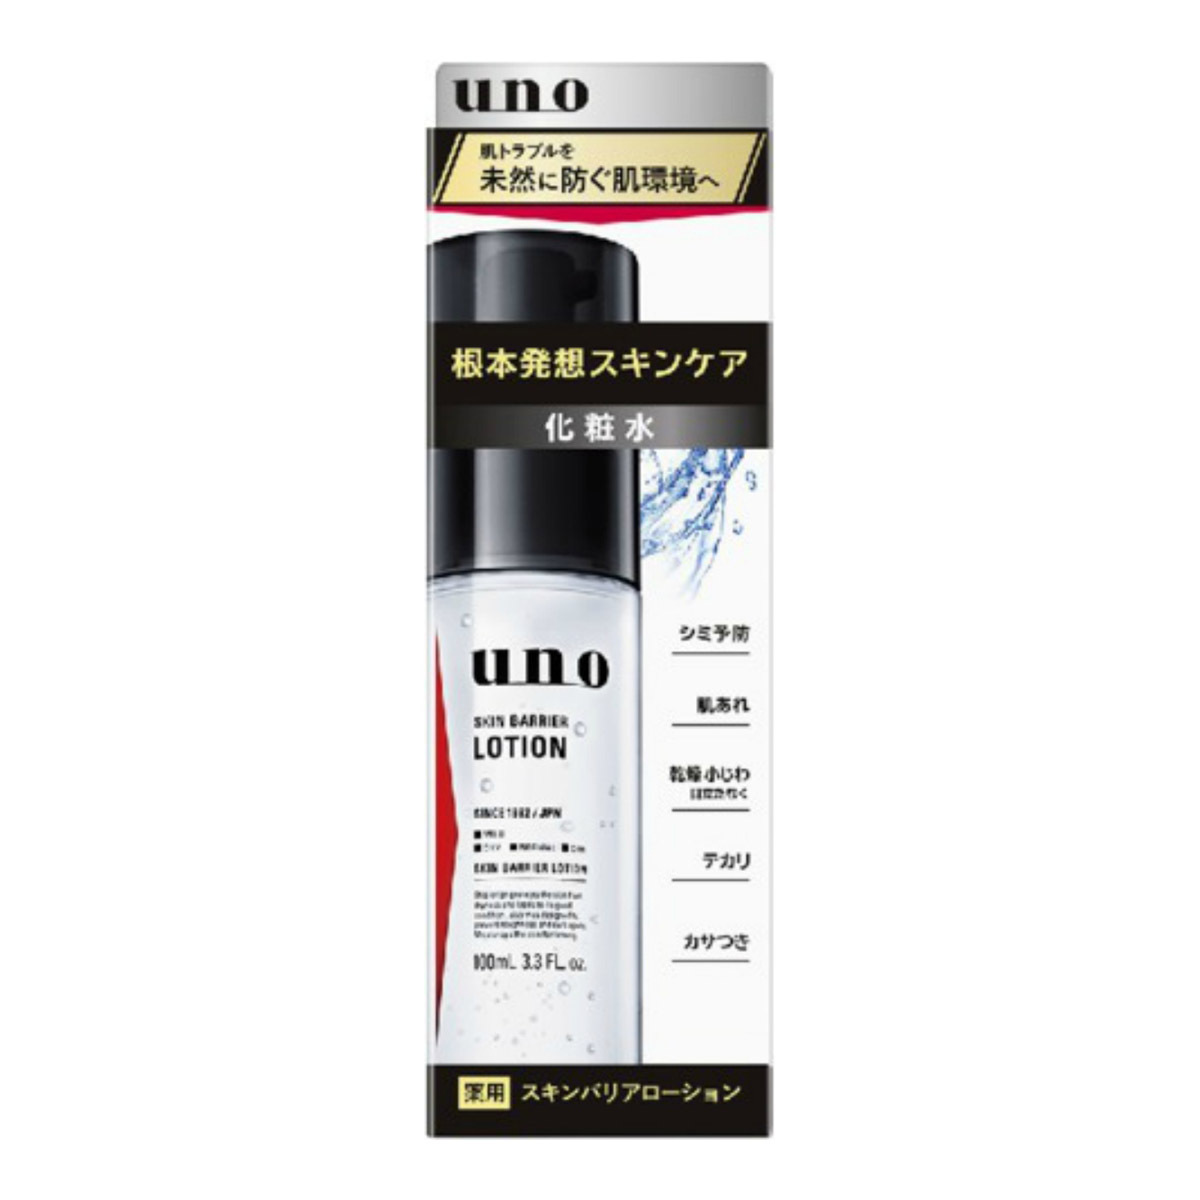 uno（ヘアケア） ウーノ スキンバリアローション 100ml×36 男性用化粧品化粧水の商品画像